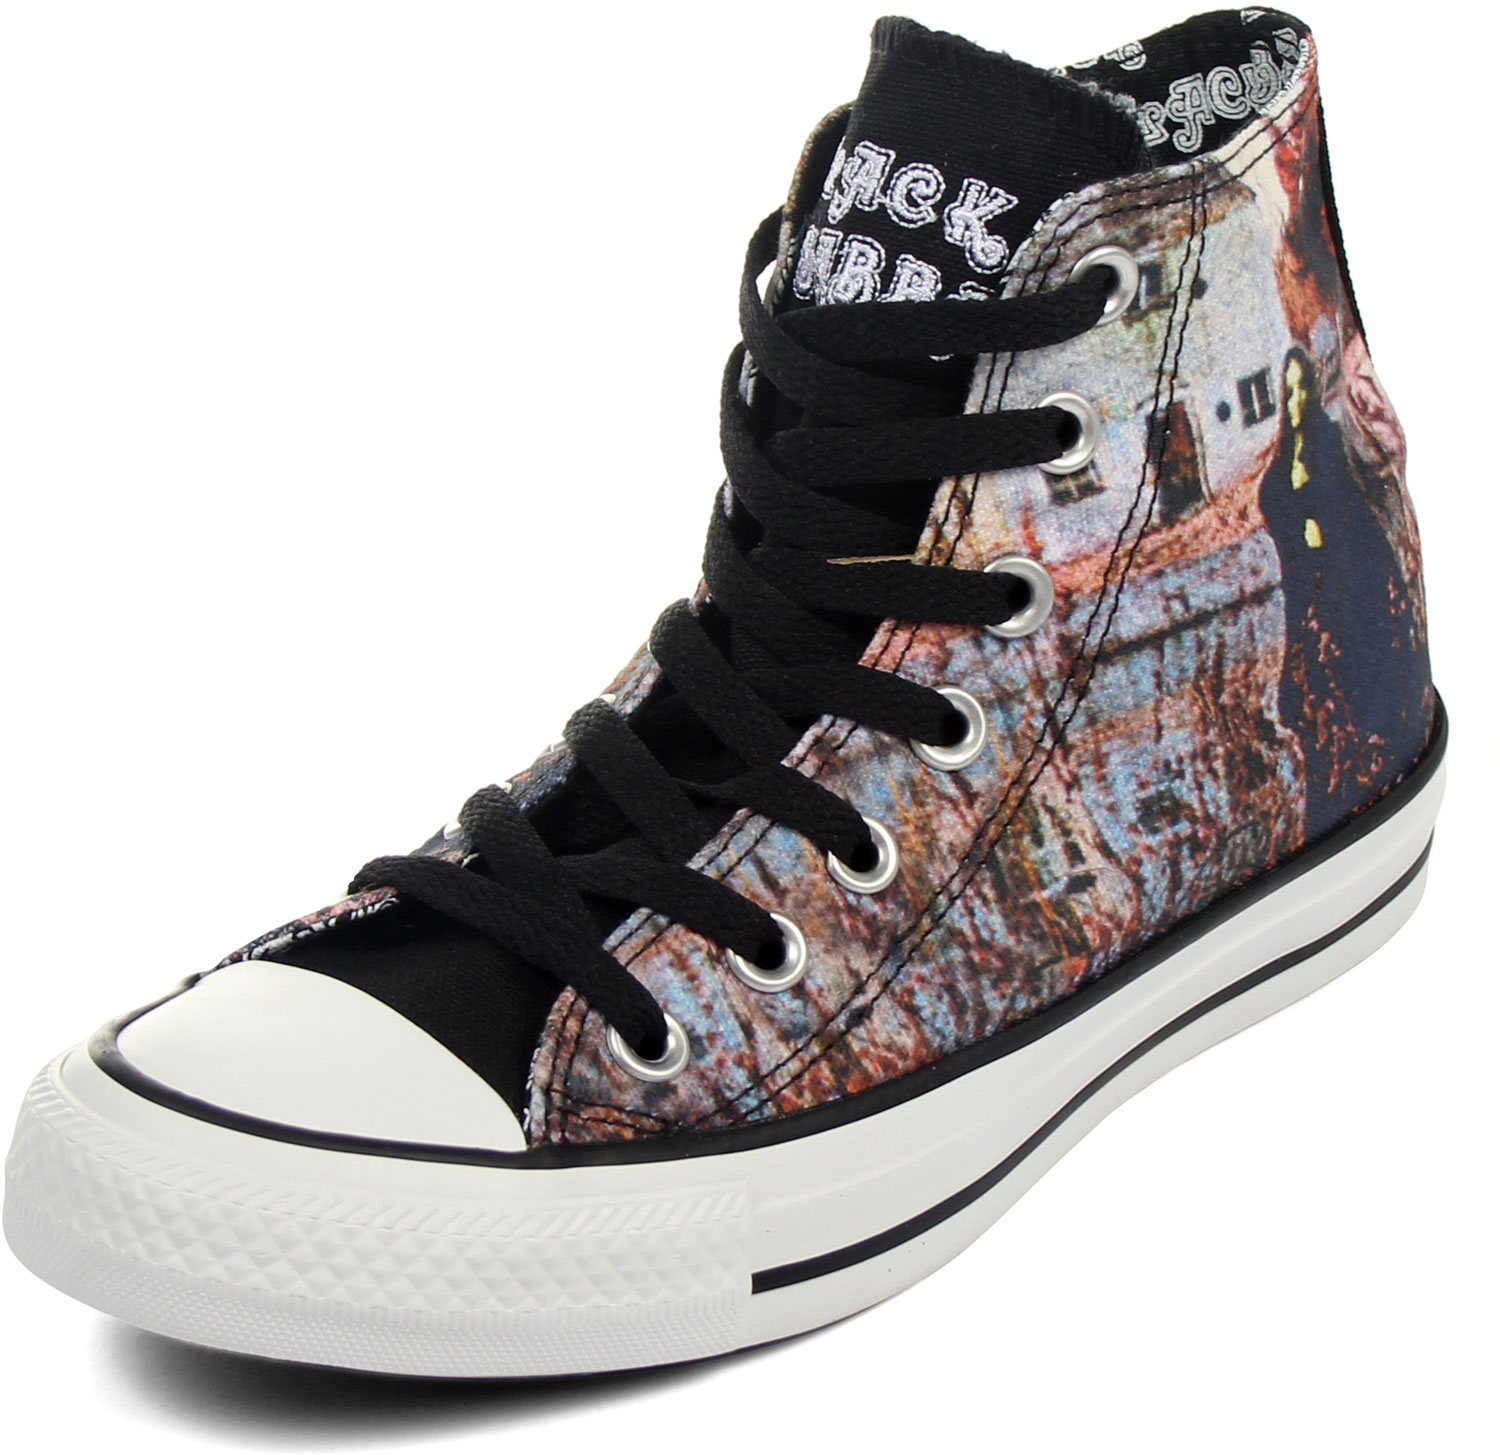 Converse - Chuck Taylor Black Sabbath Edition Shoes